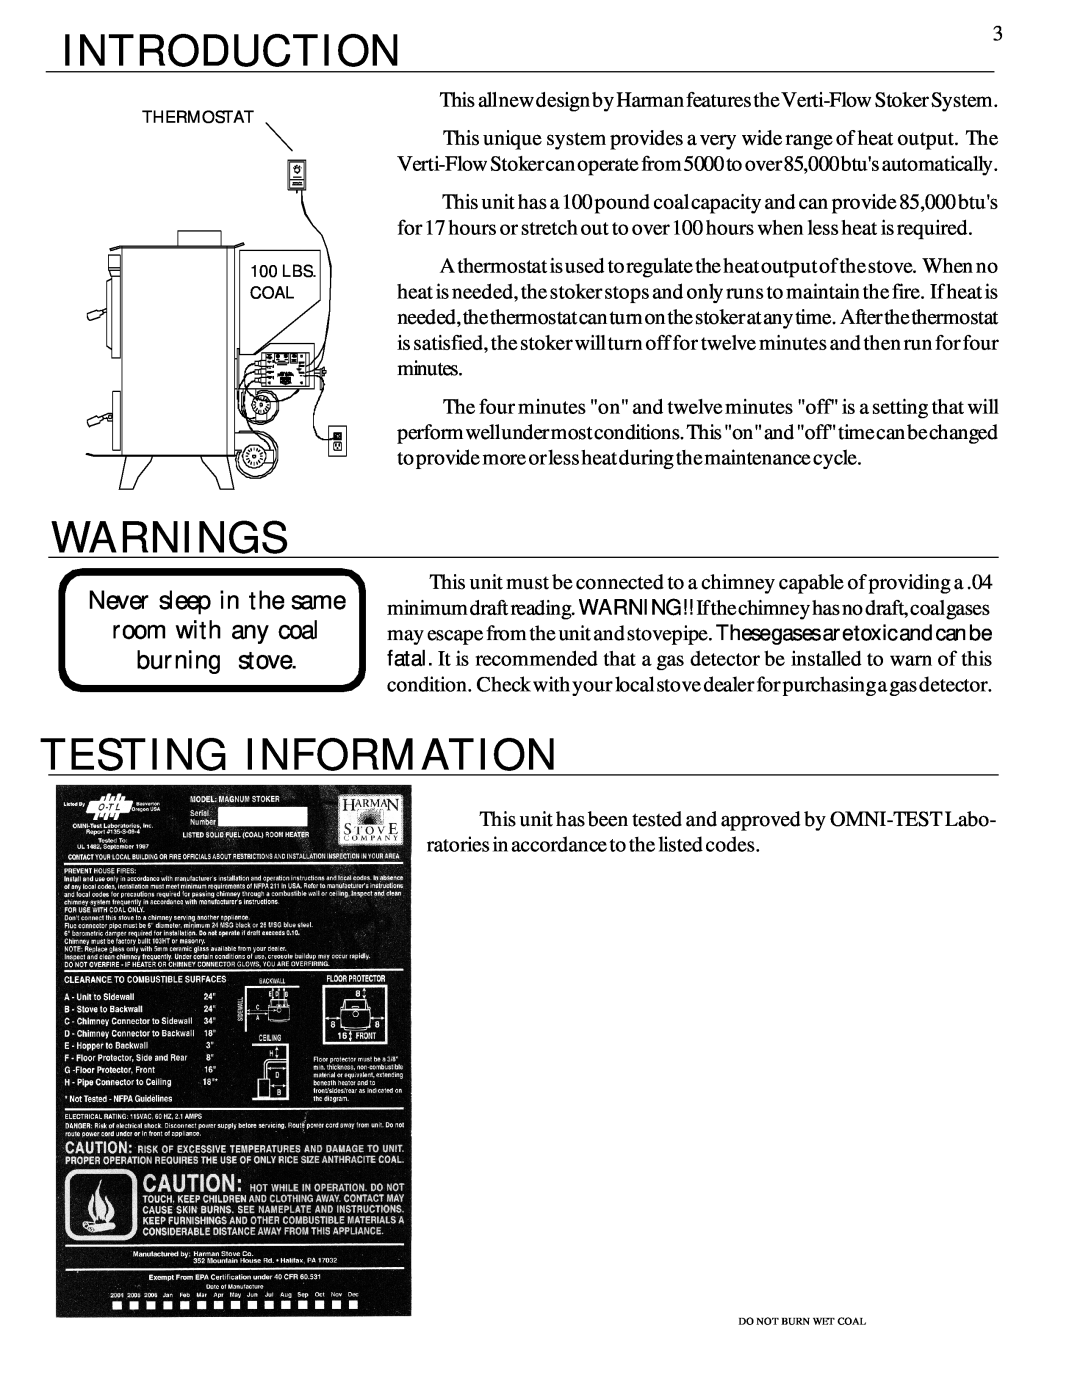 Harman Stove Company Harman Stove The Harman Magnum Stoker manual Introduction, Warnings, Testing Information 